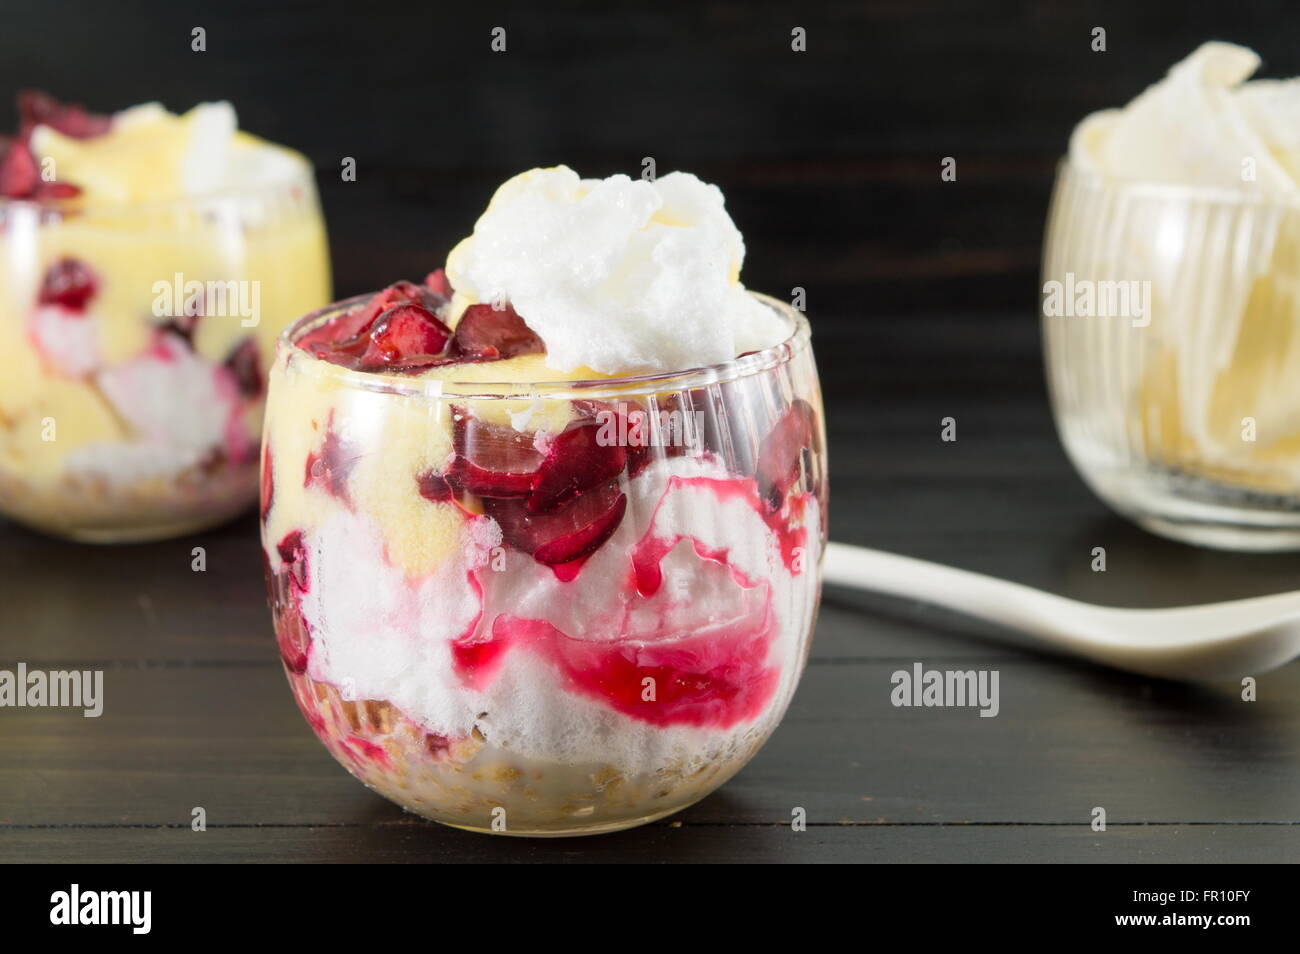 Homemade granola parfait with cherries and cream. Healthy dessert Stock Photo